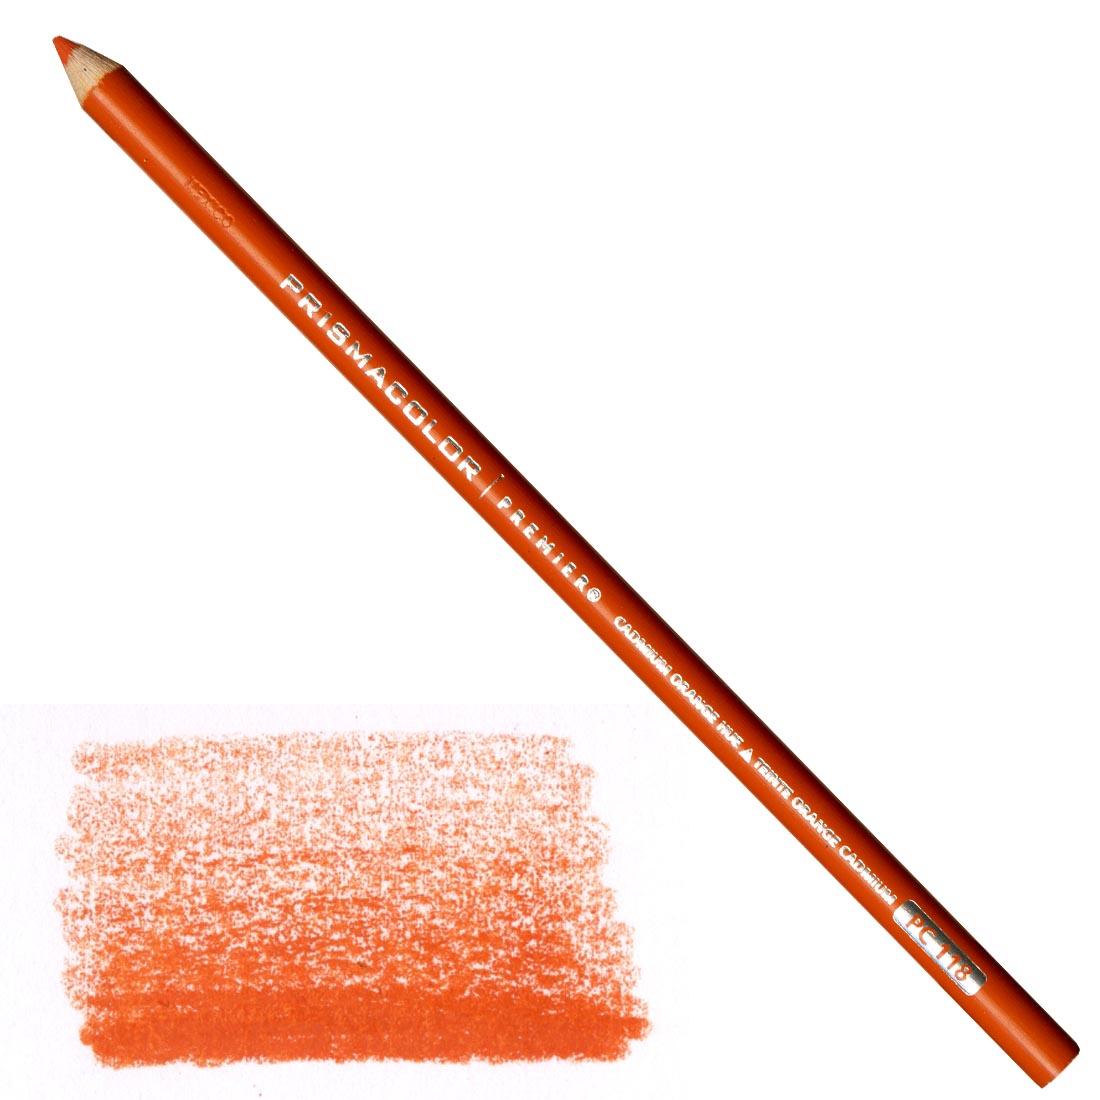 Cadmium Orange Hue Prismacolor Premier Colored Pencil with a sample colored swatch